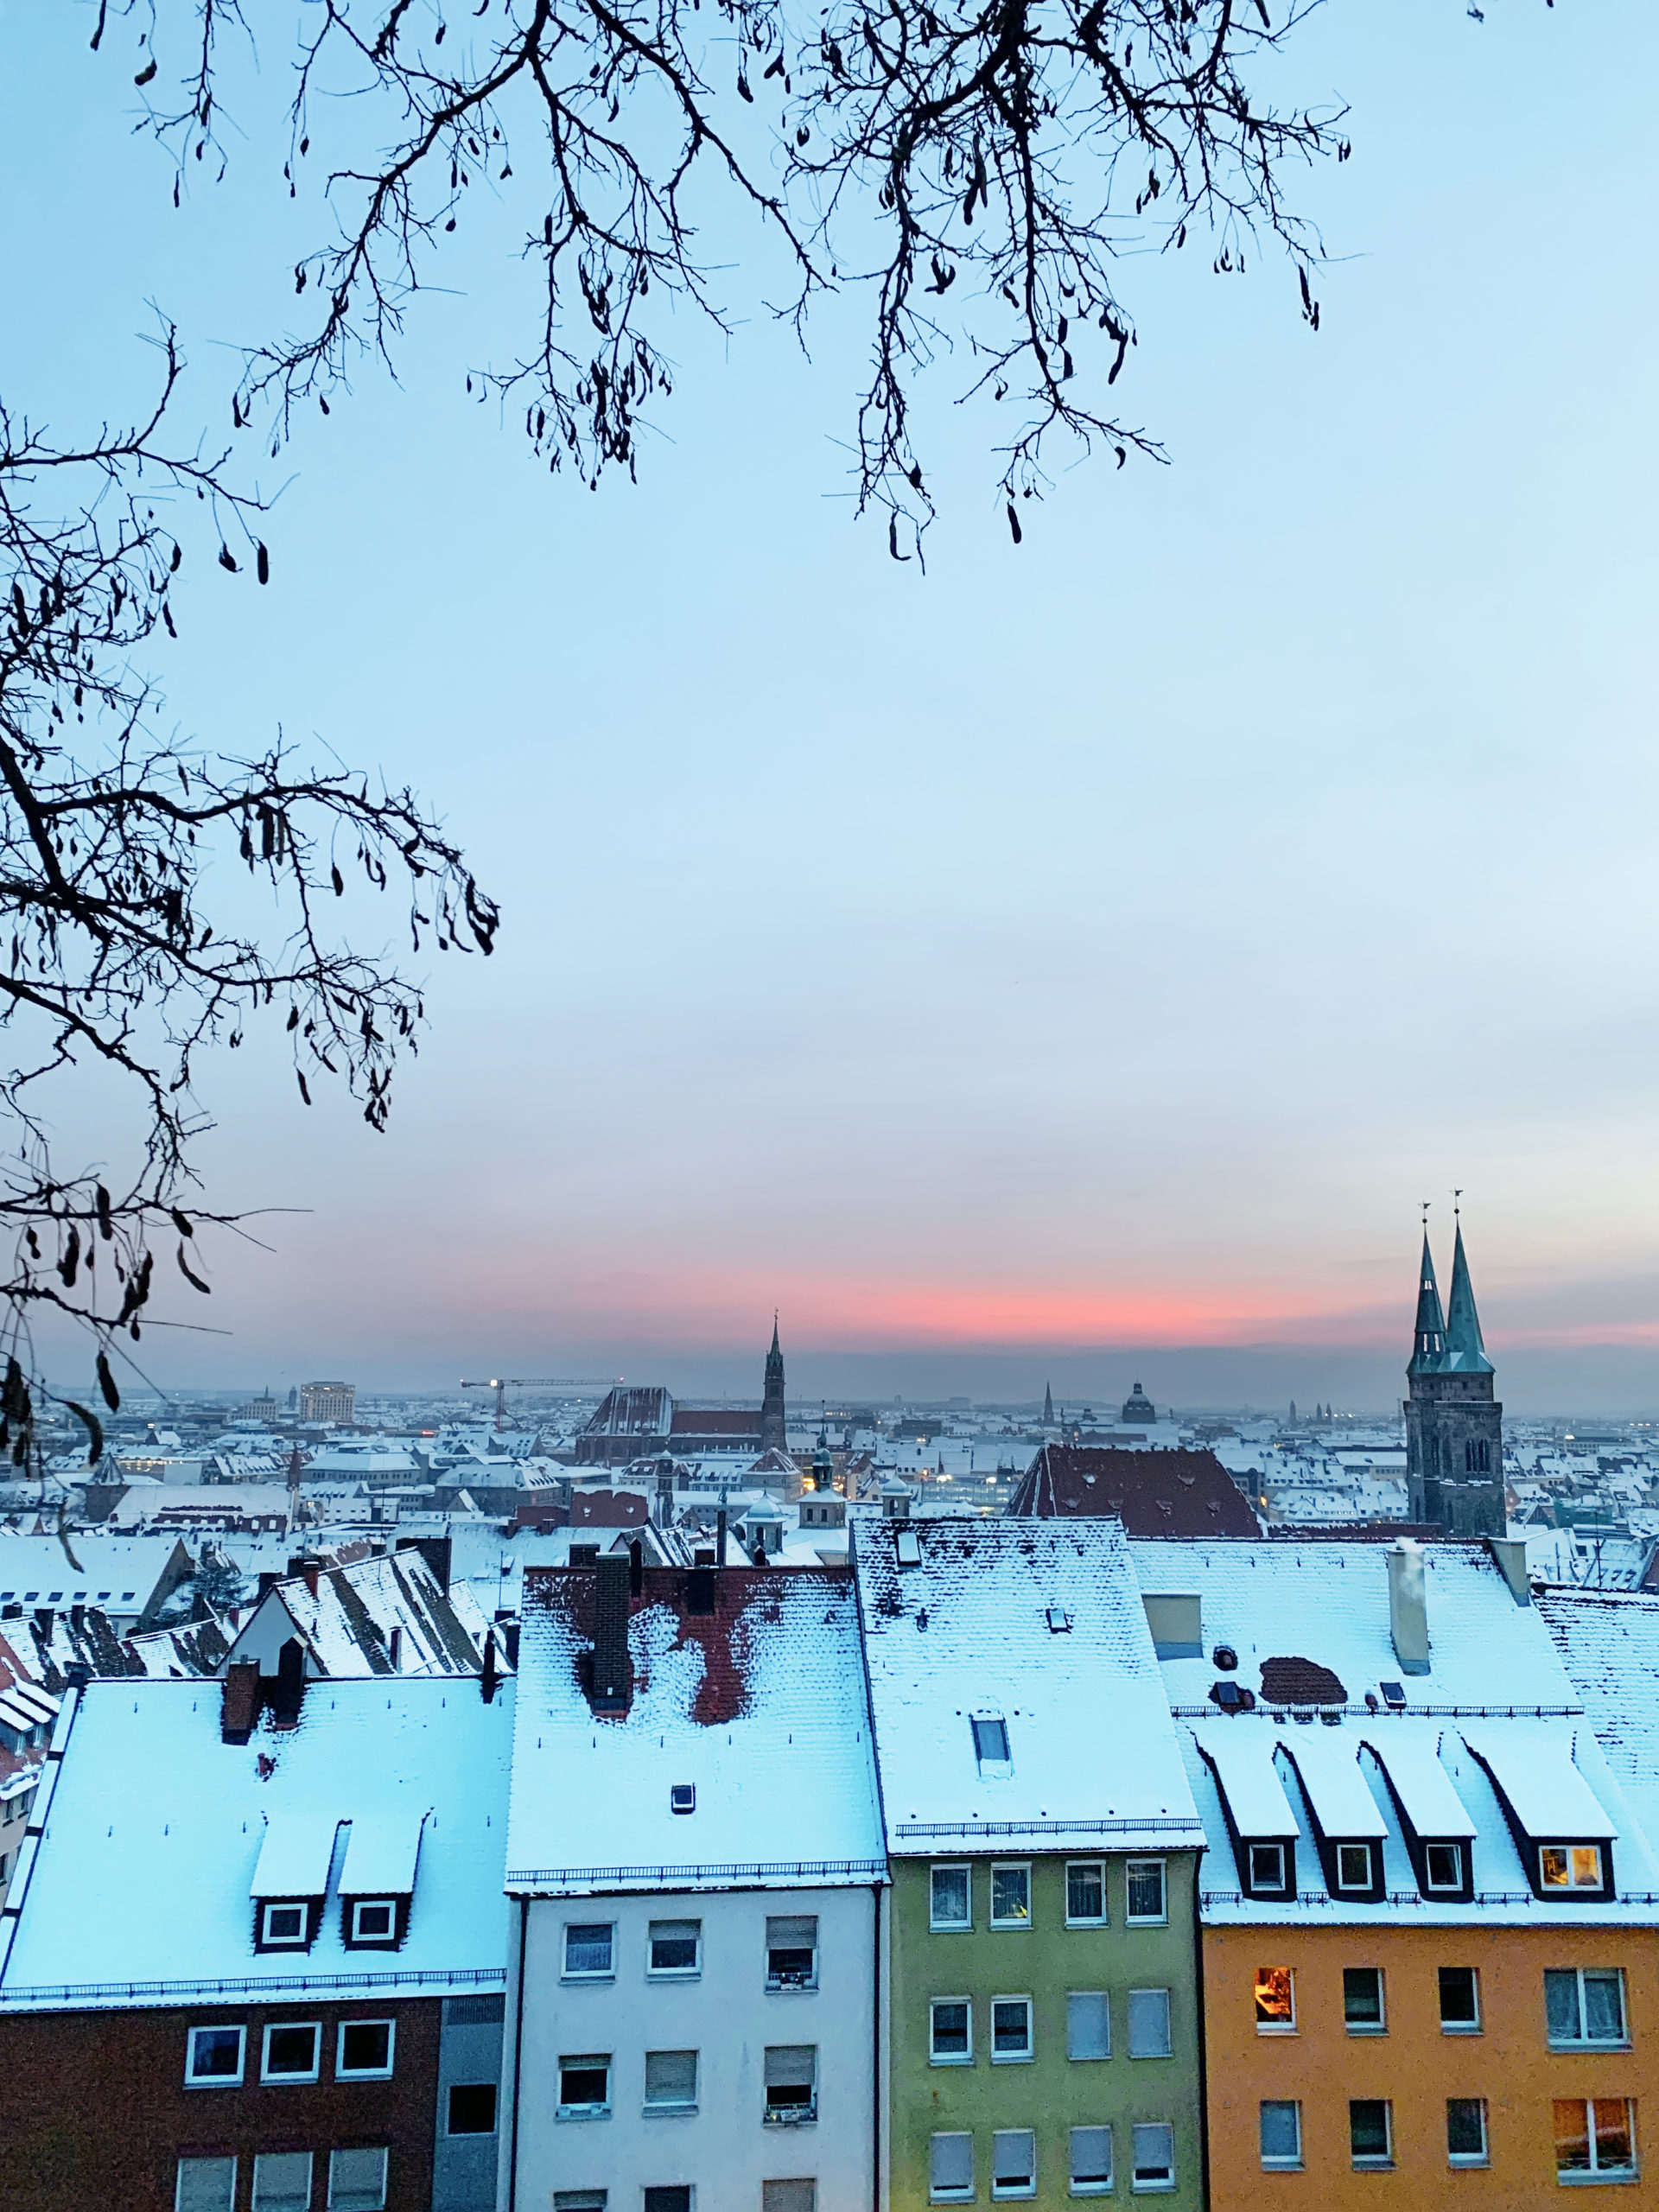 Nuremberg in Winter. Source: Envato Elements